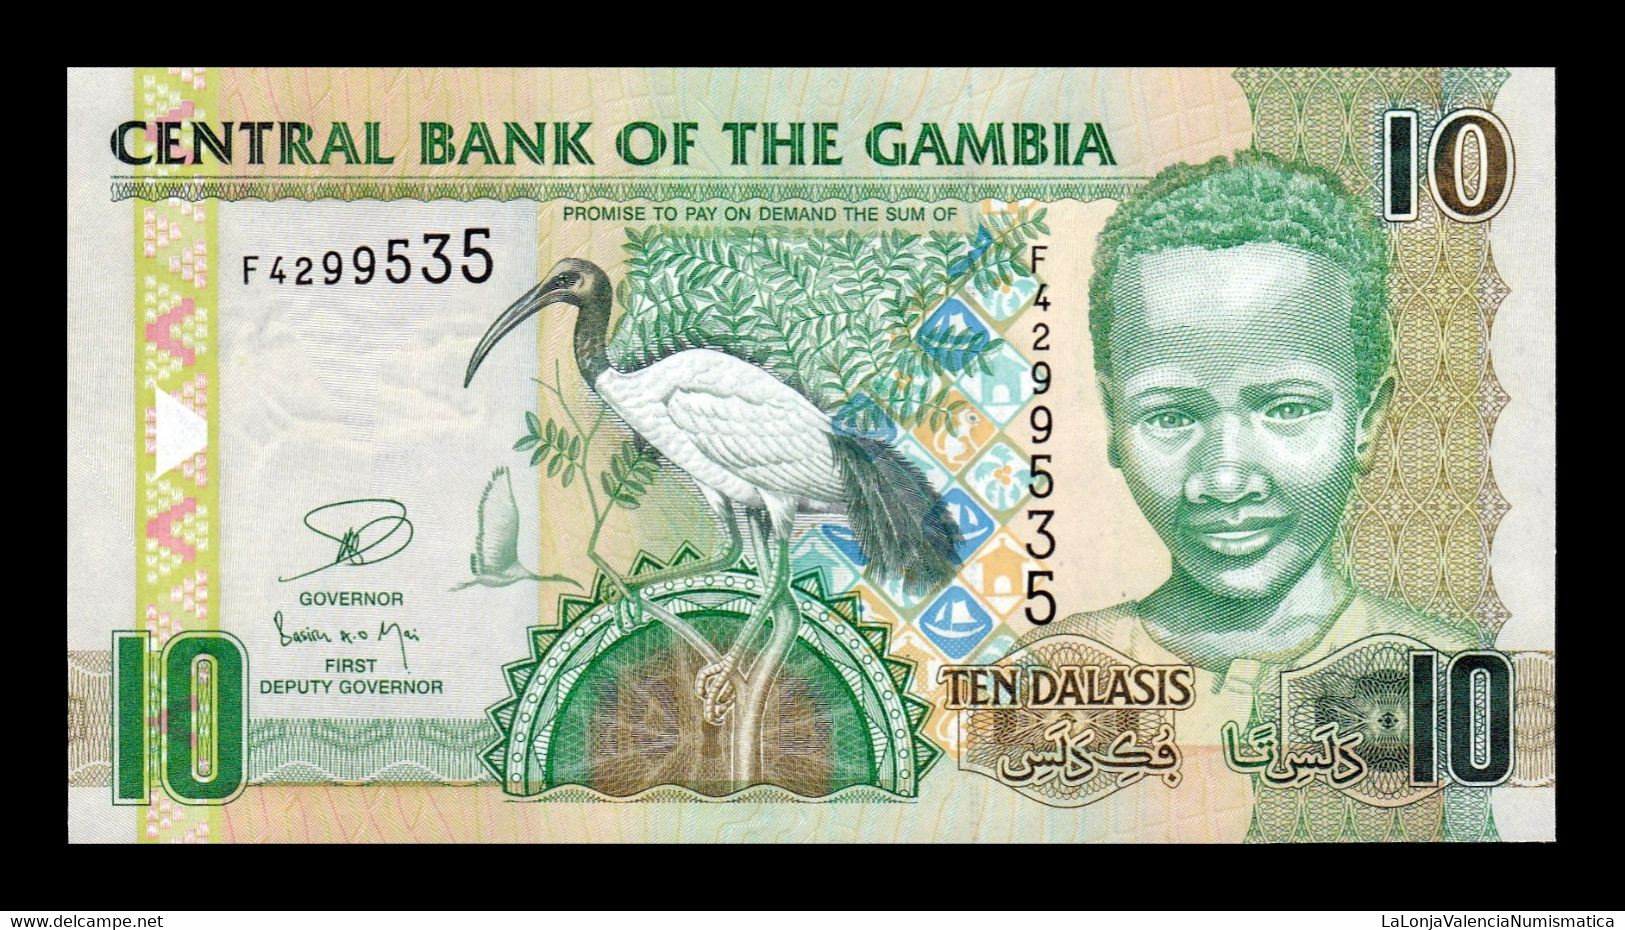 Gambia 10 Dalasis ND (2013) Pick 26c Sc Unc - Gambie